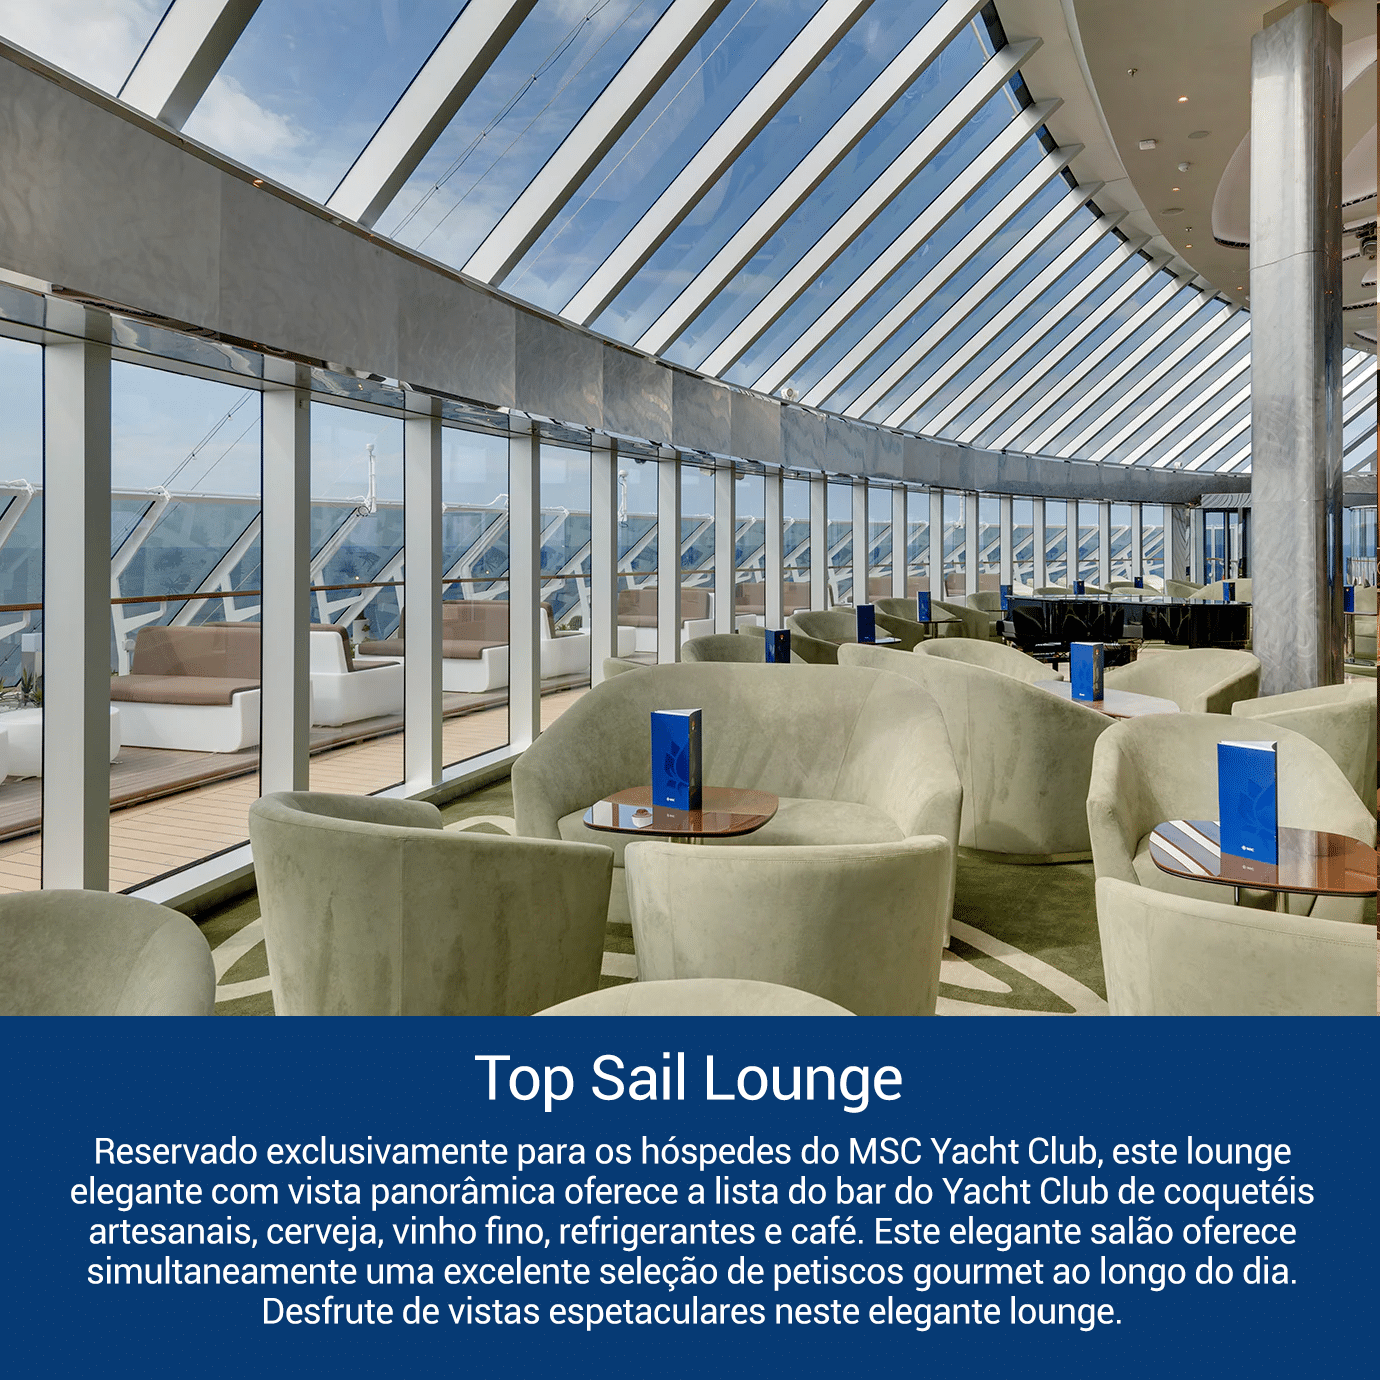 Top Sail Lounge